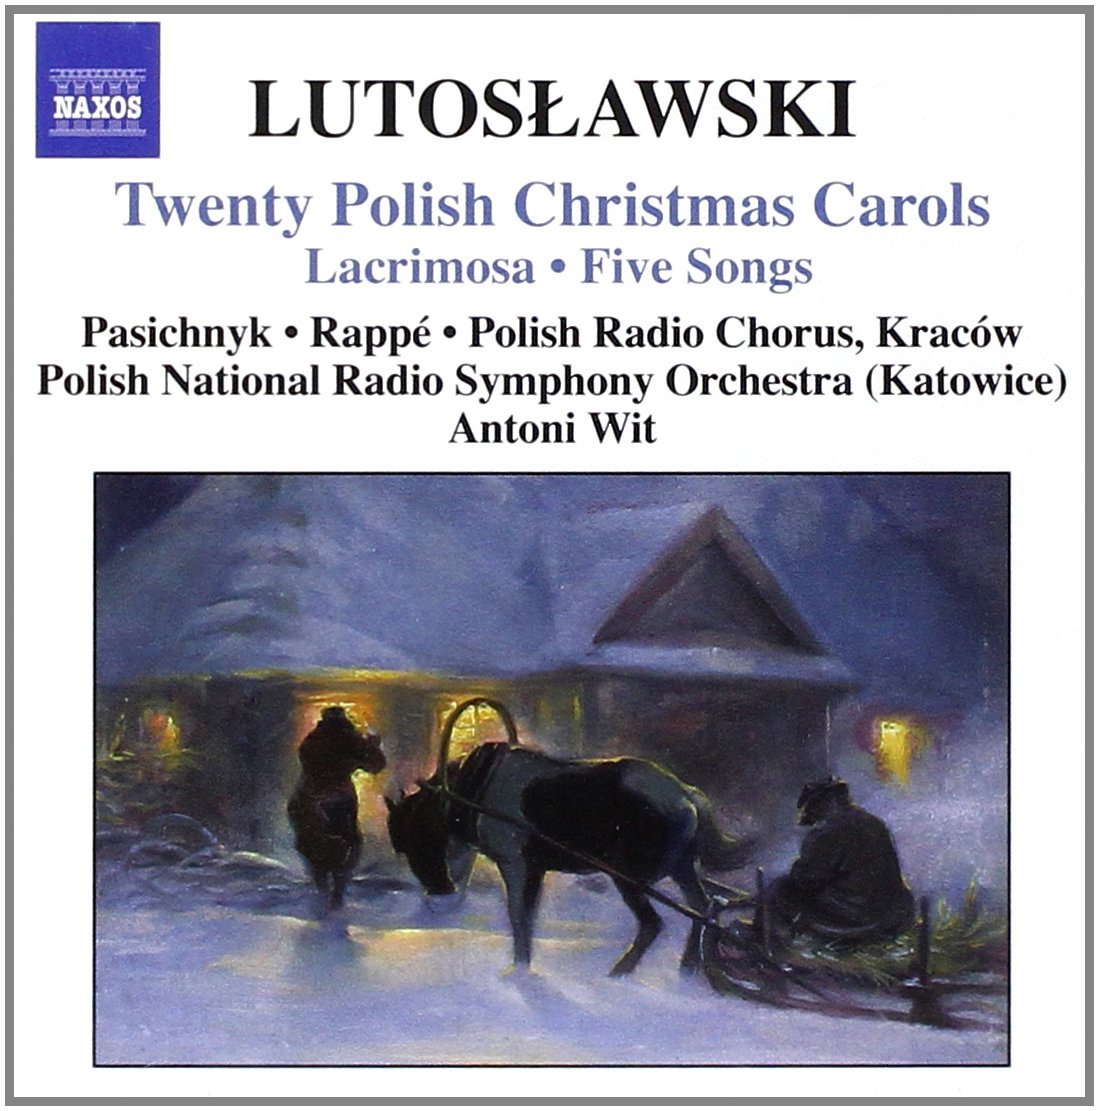 Lutoslawski 20 Polish Christmas Carols Music Cd Sheet Music Songbook